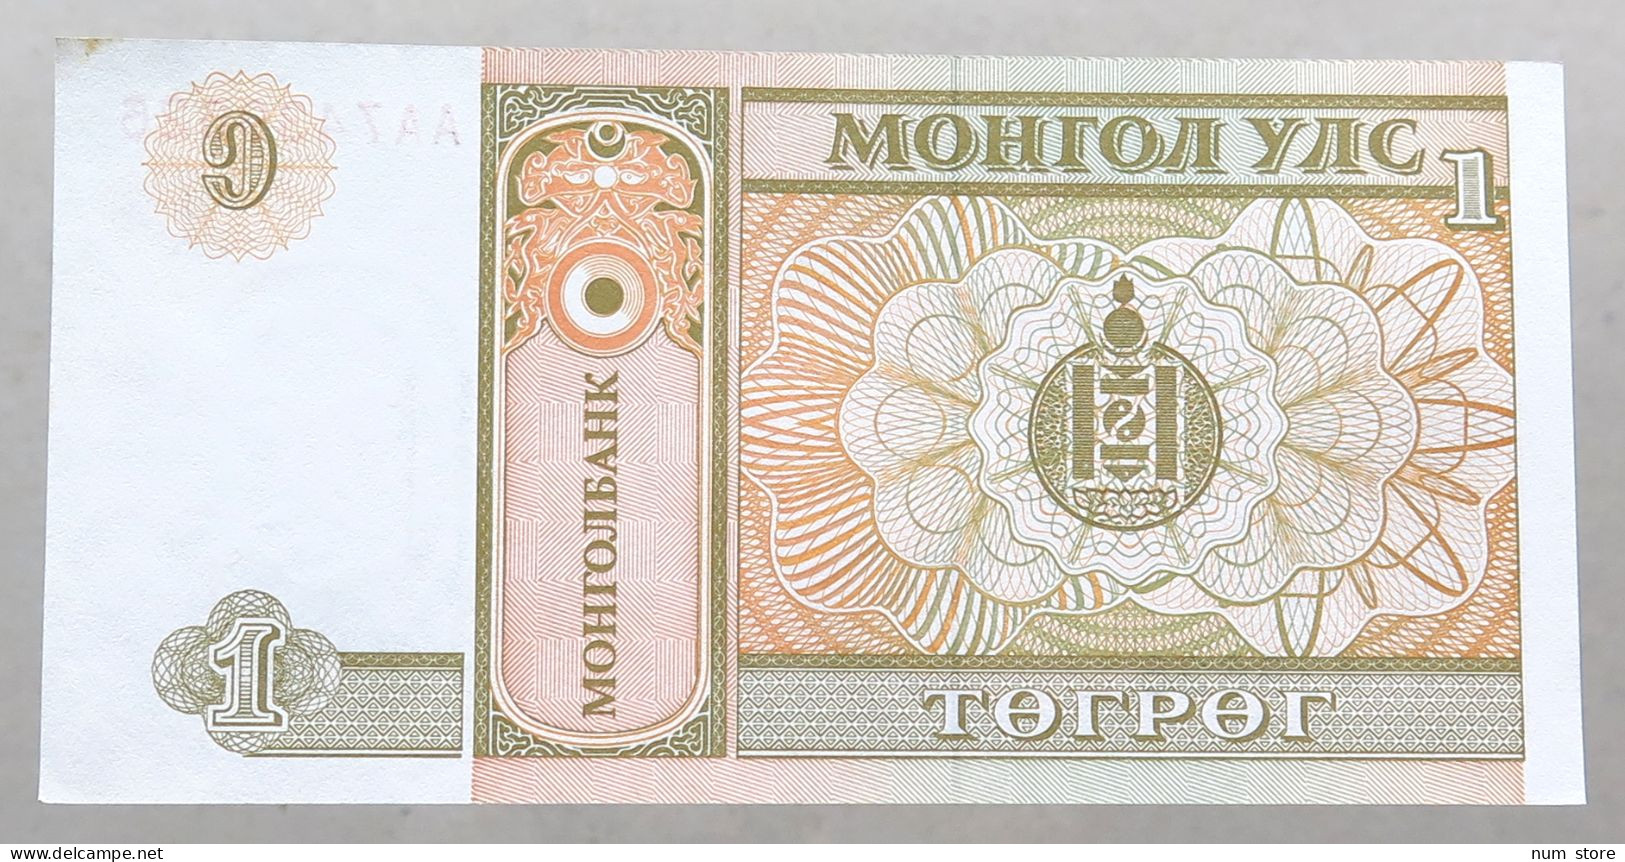 MONGOLIA 1 TUGRIK 1993-2008 TOP #alb051 1017 - Mongolei